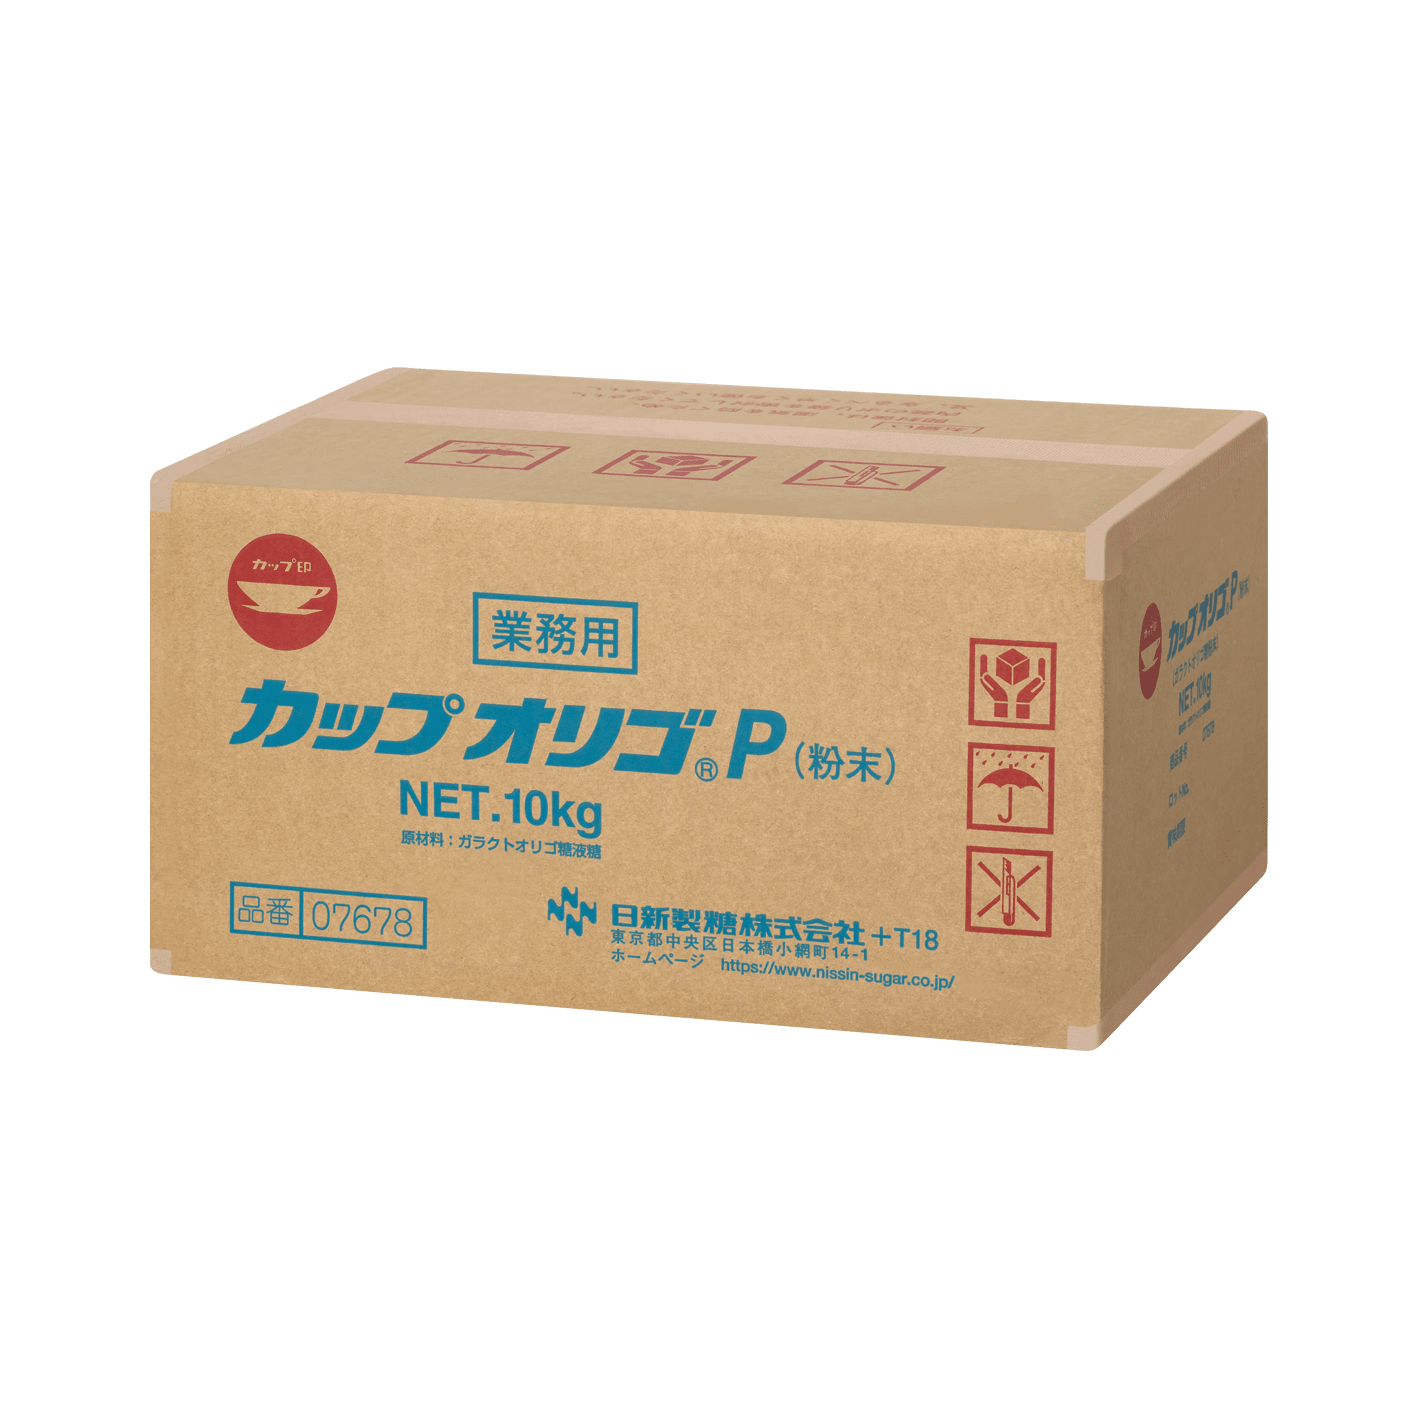 Powder type:Carton (net weight 10kg)